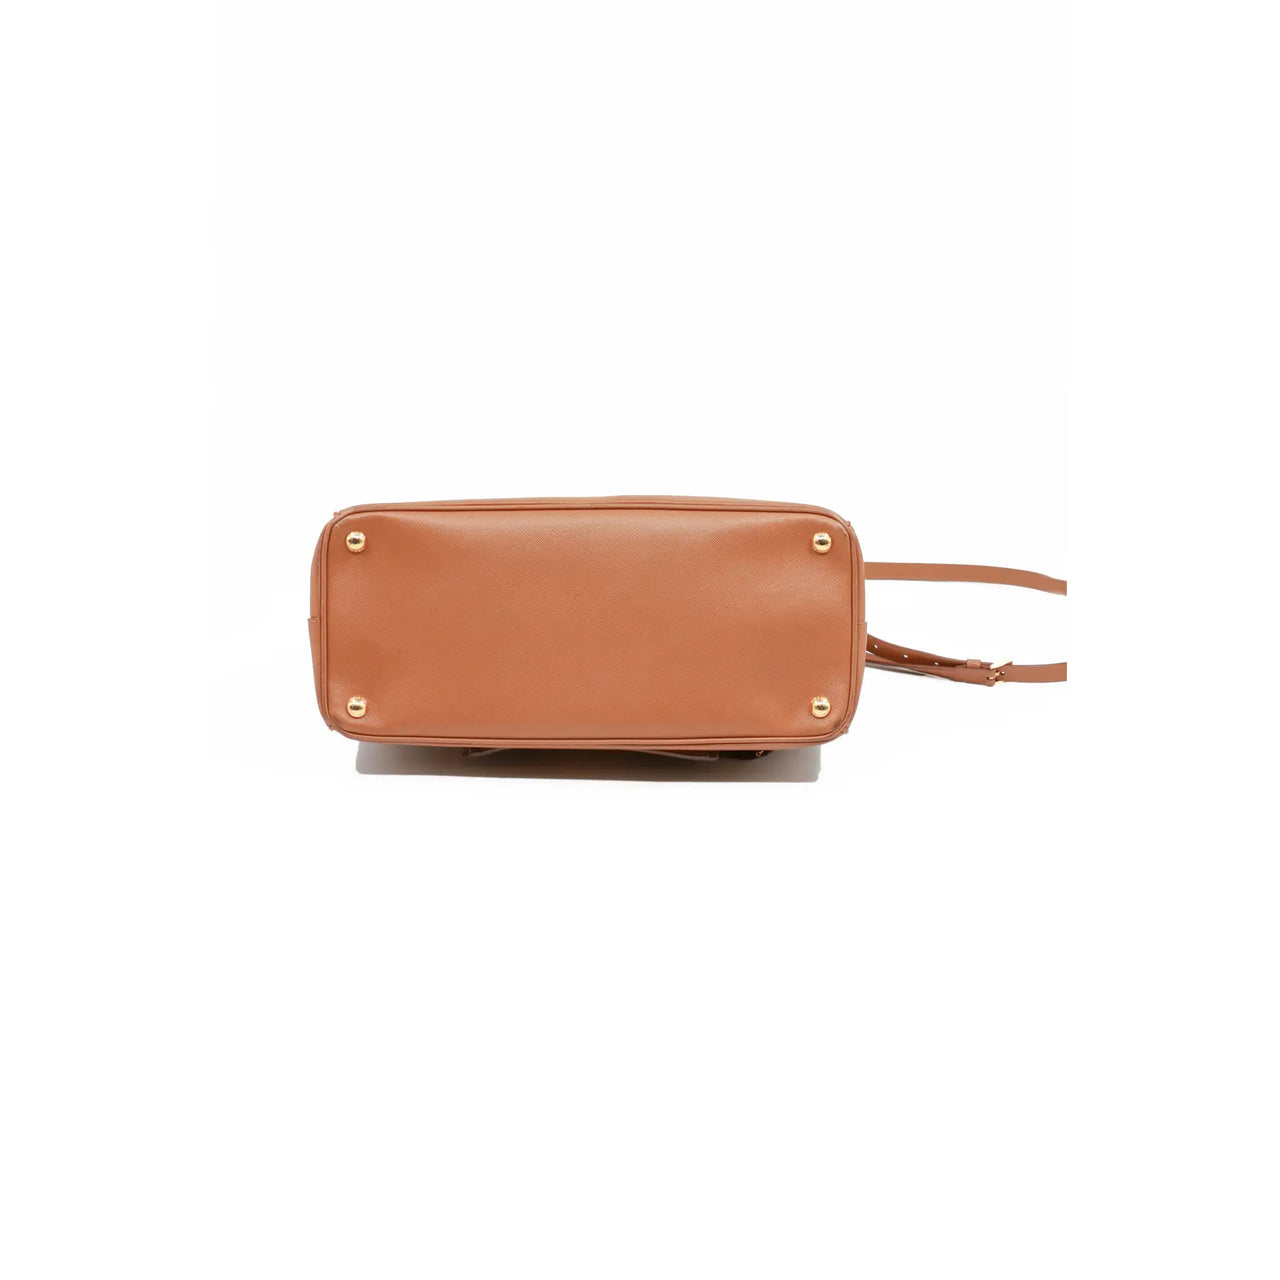 Saffiano leather handbag Prada Camel in Leather - 26425179